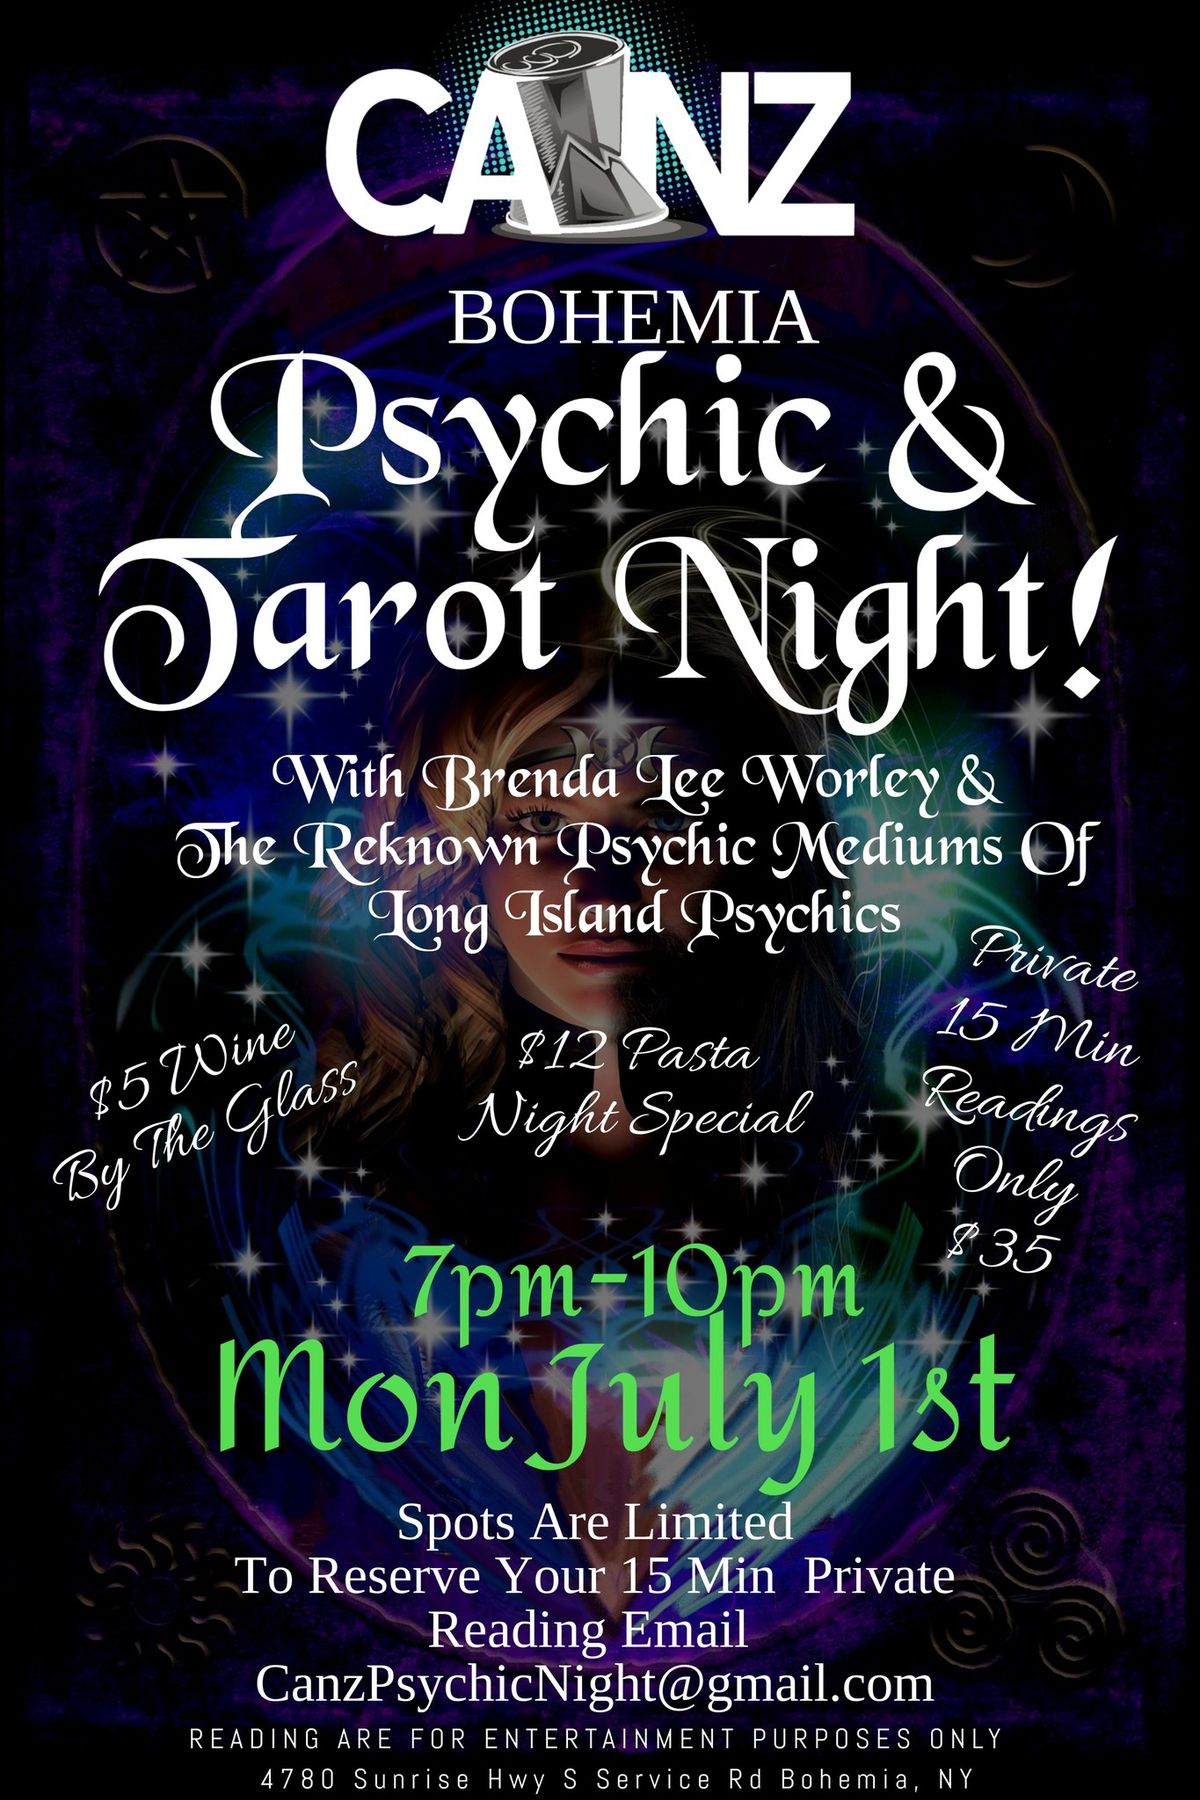 Psychic Night at Canz in Bohemia, NY